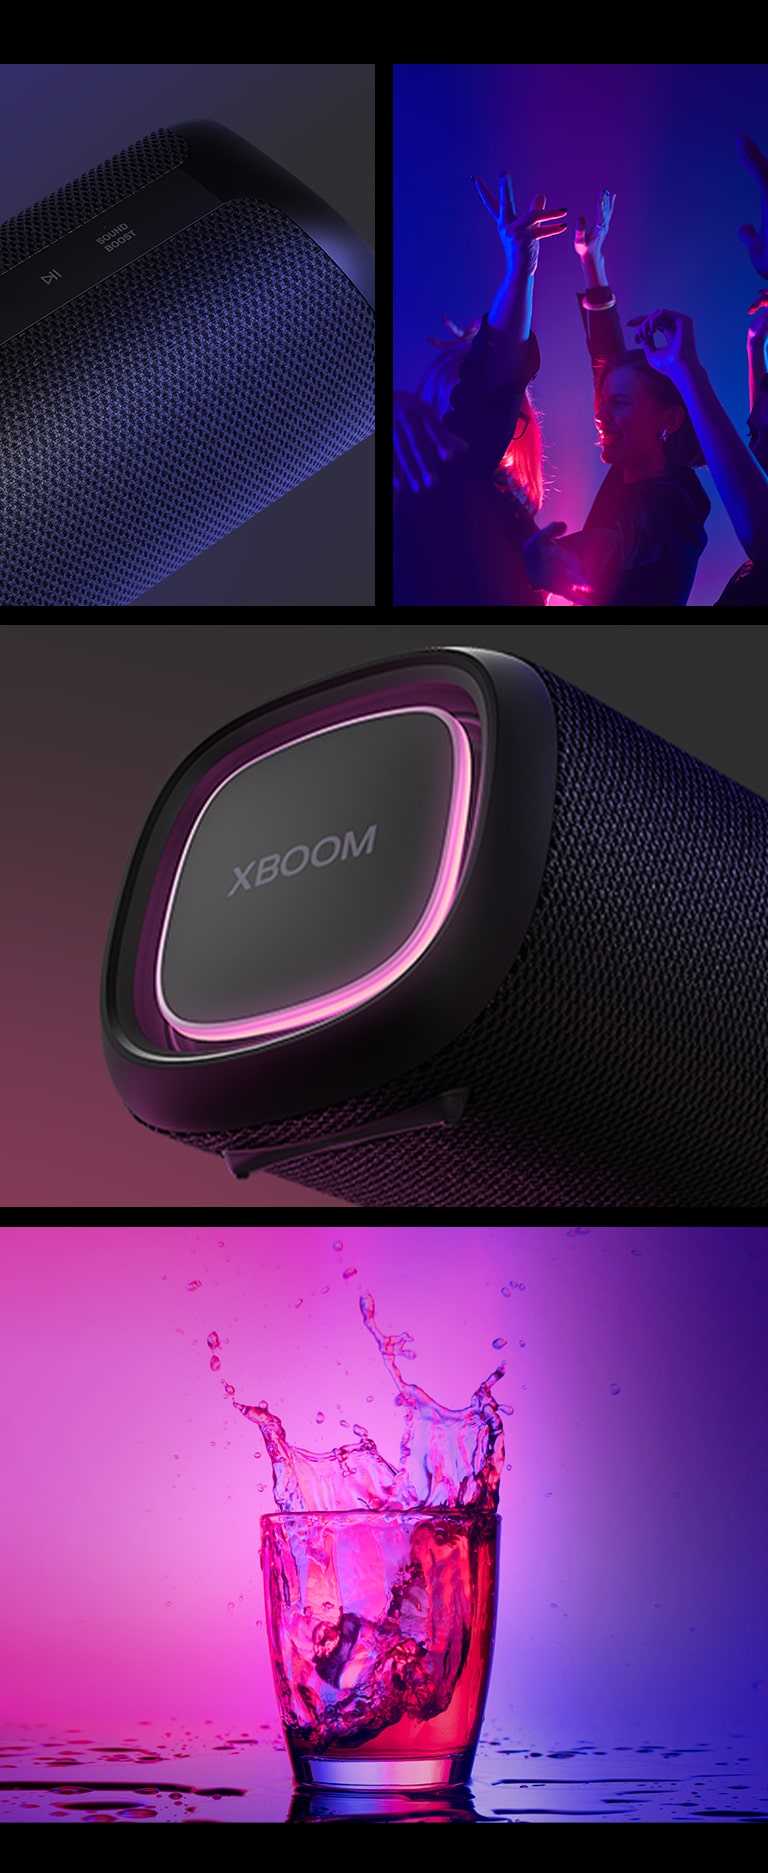 Parlante Bluetooth LG XBOOM Go XG5 – Negro – Level Tecnology